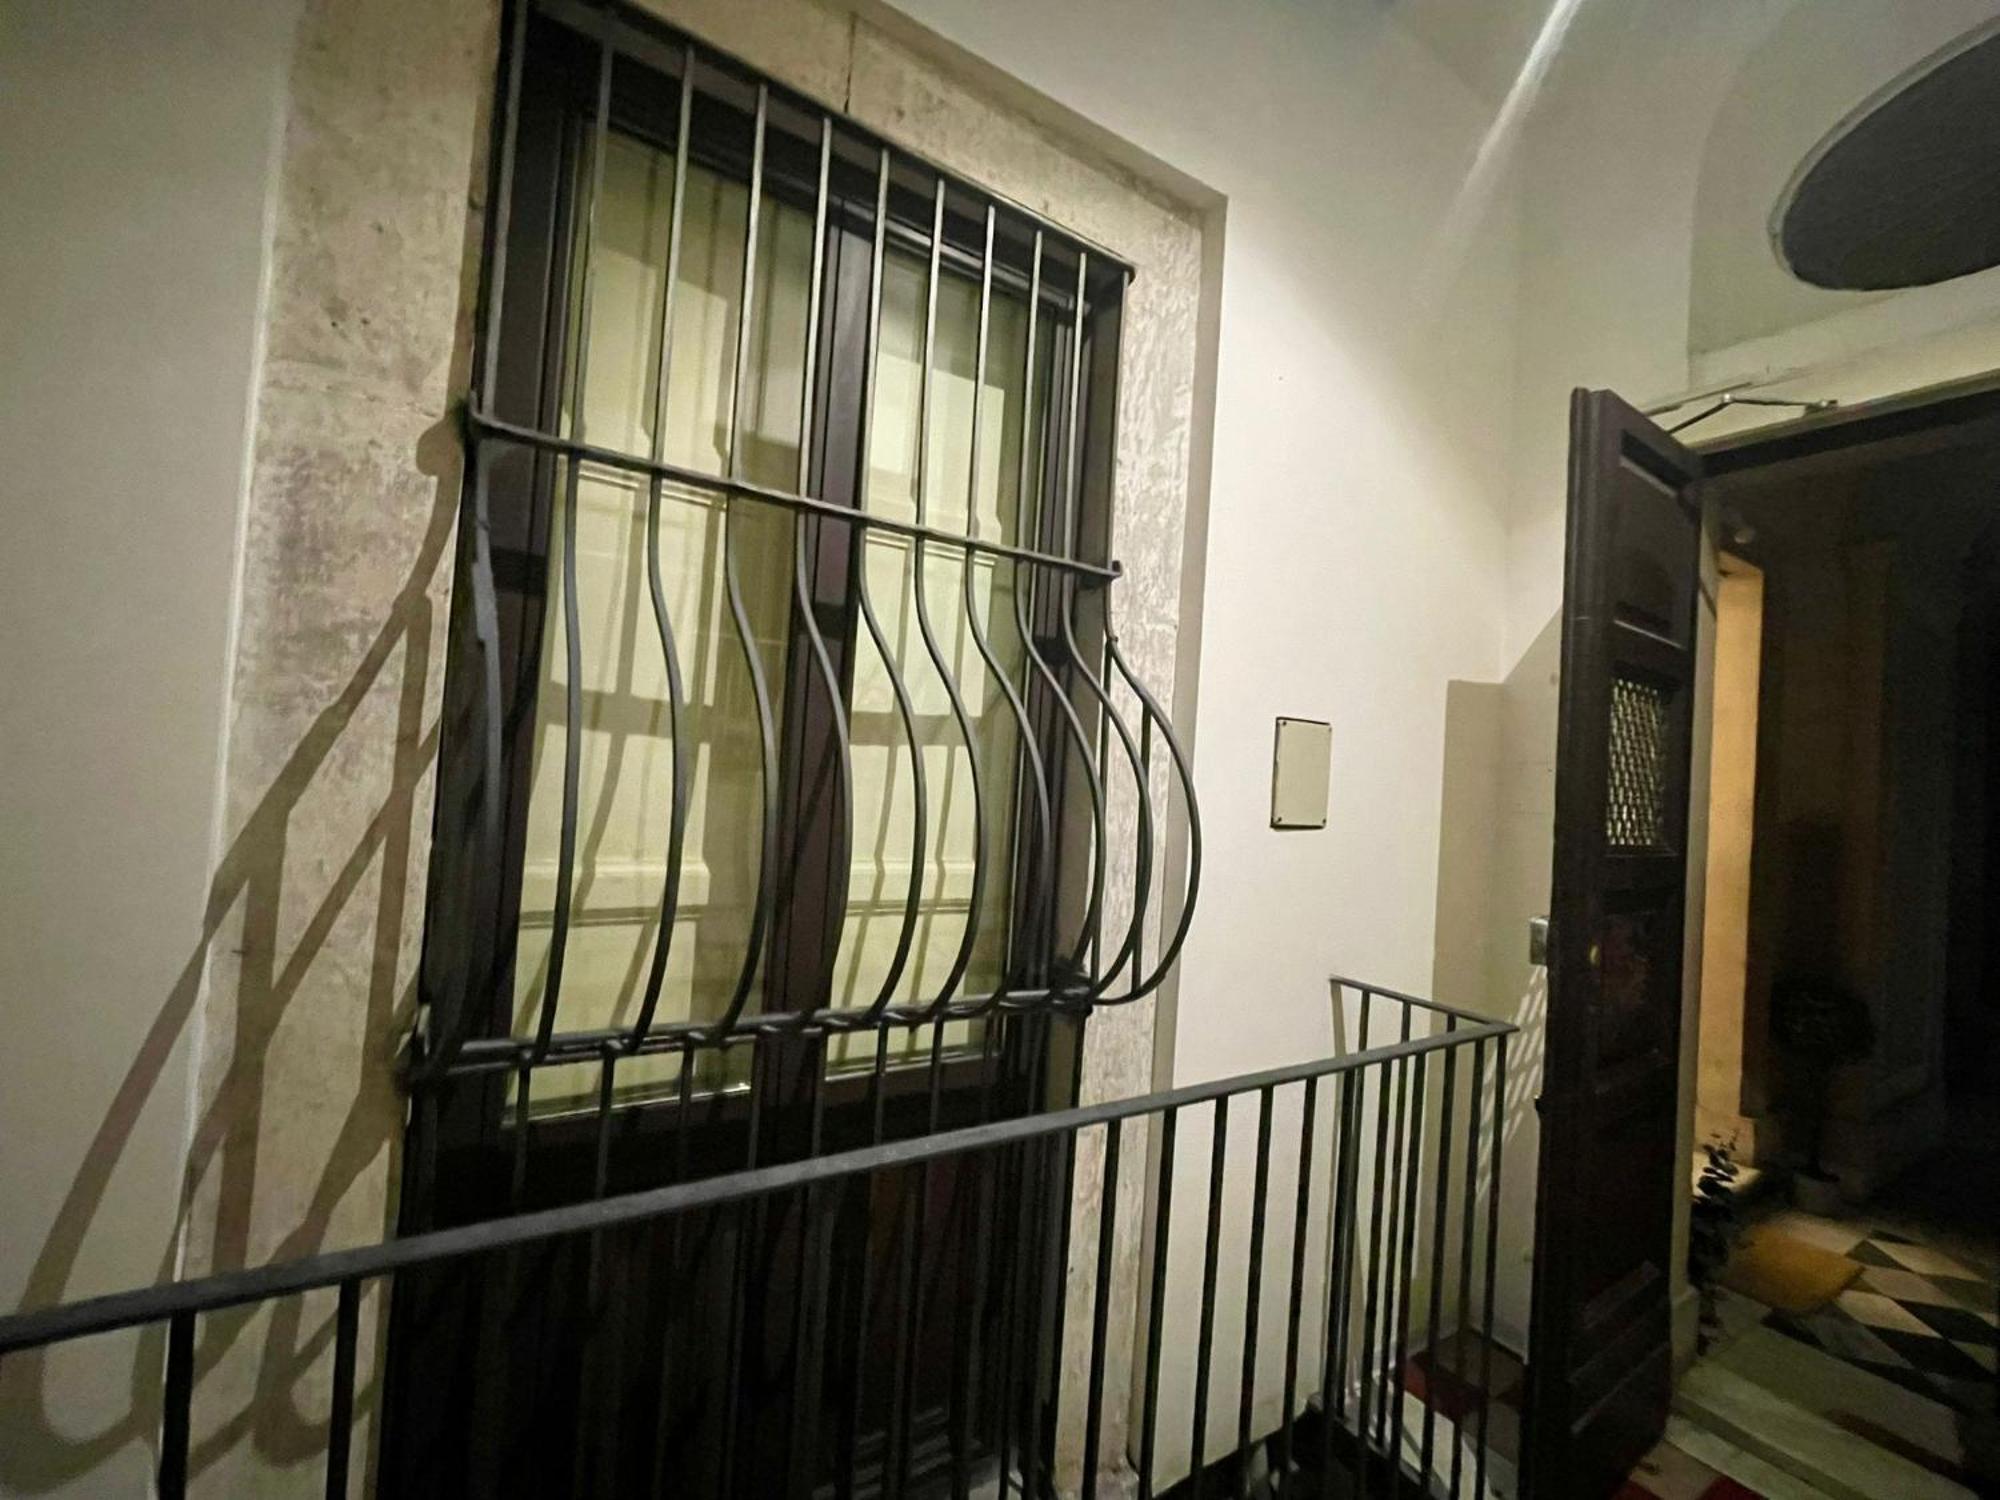 Sleep Inn Catania Rooms - Affittacamere Exterior photo